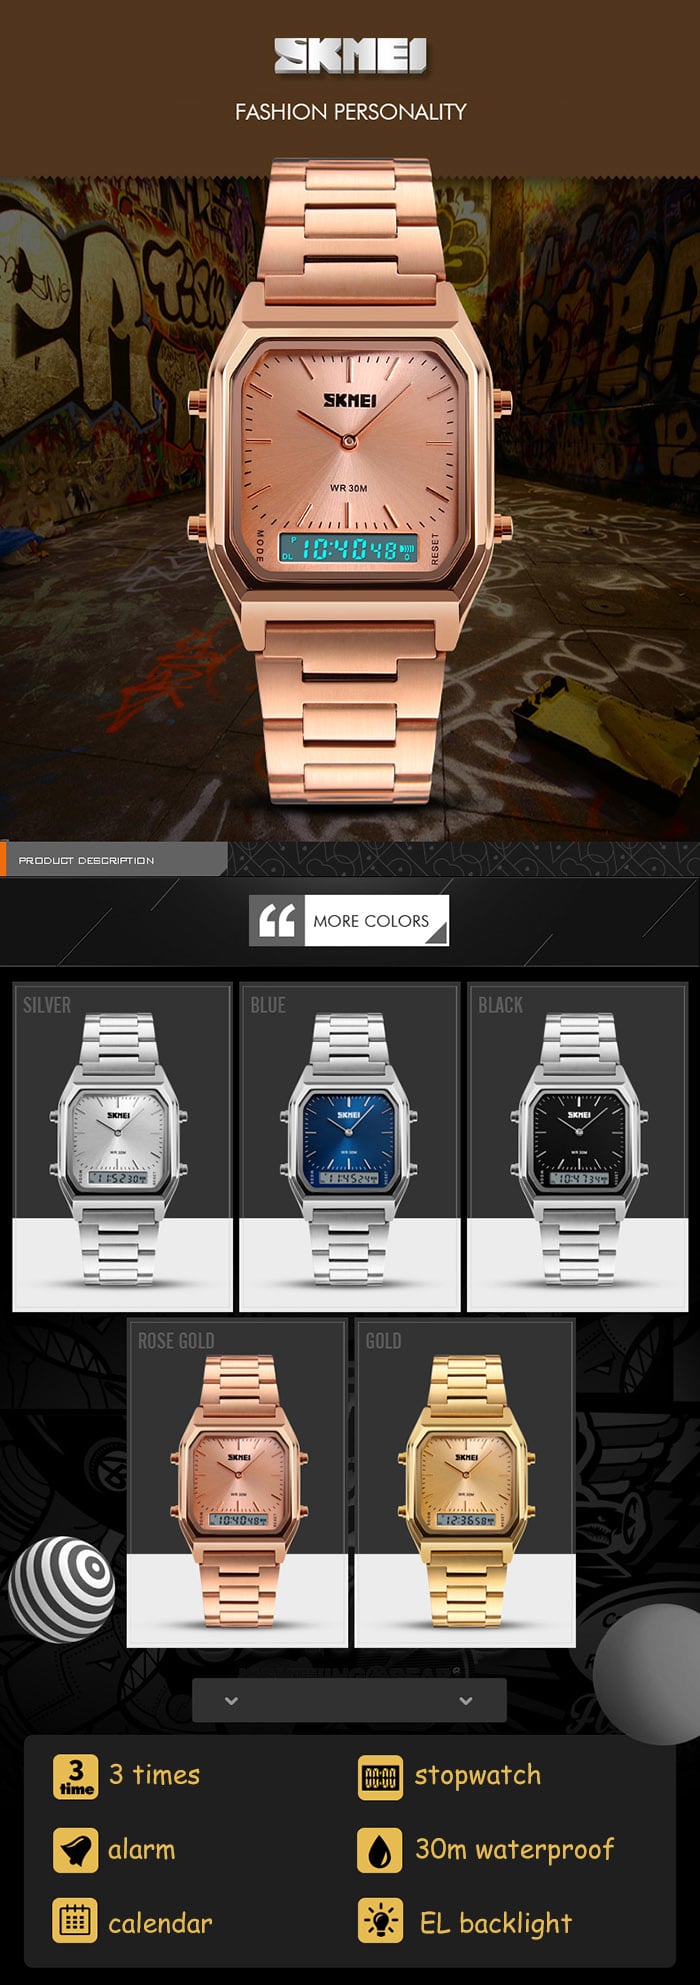 SKMEI 1220 Dual Time Display Fashion Unisex Watch with EL Backlight- Black